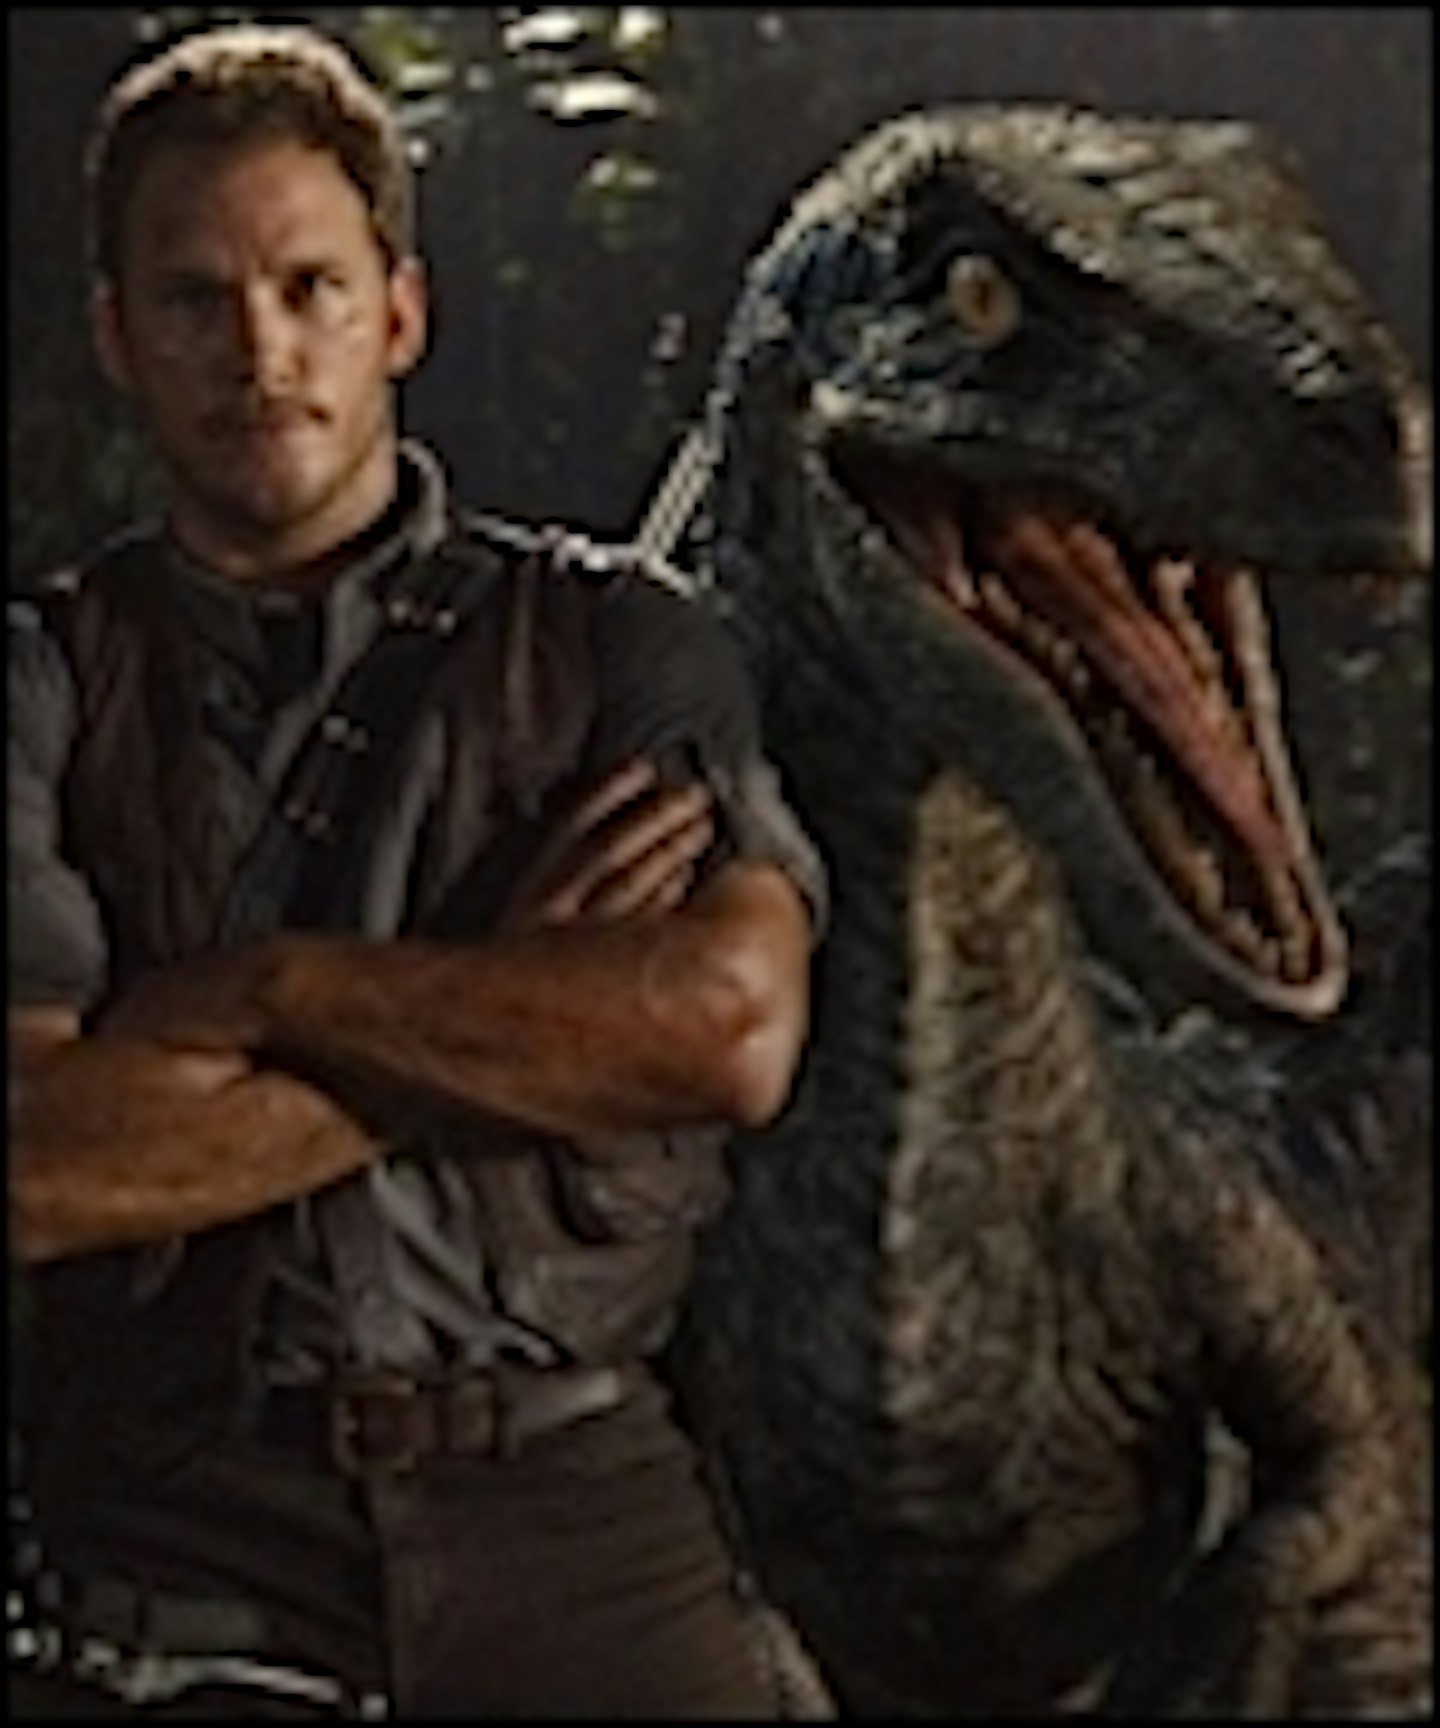 Chris Pratt Features In A New Jurassic World Image